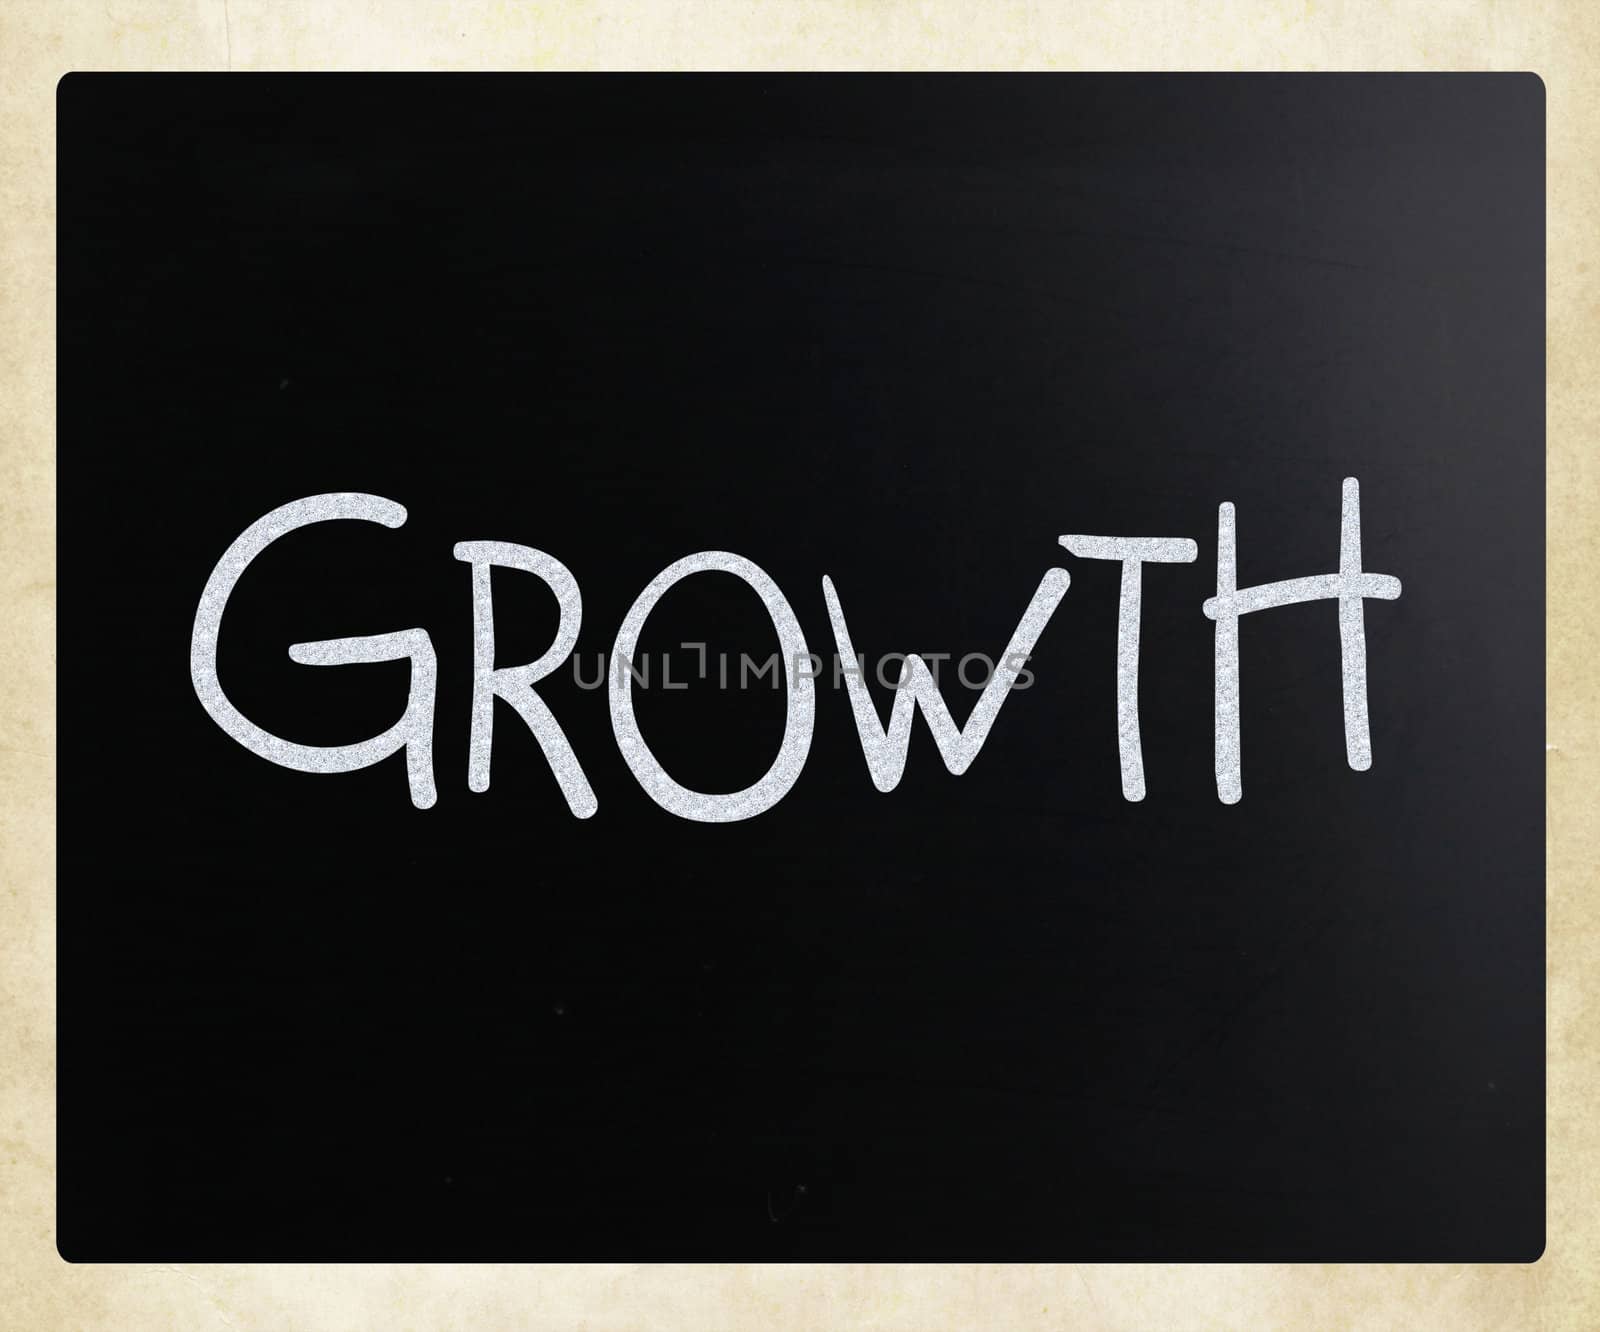 "Growth" handwritten with white chalk on a blackboard by nenov